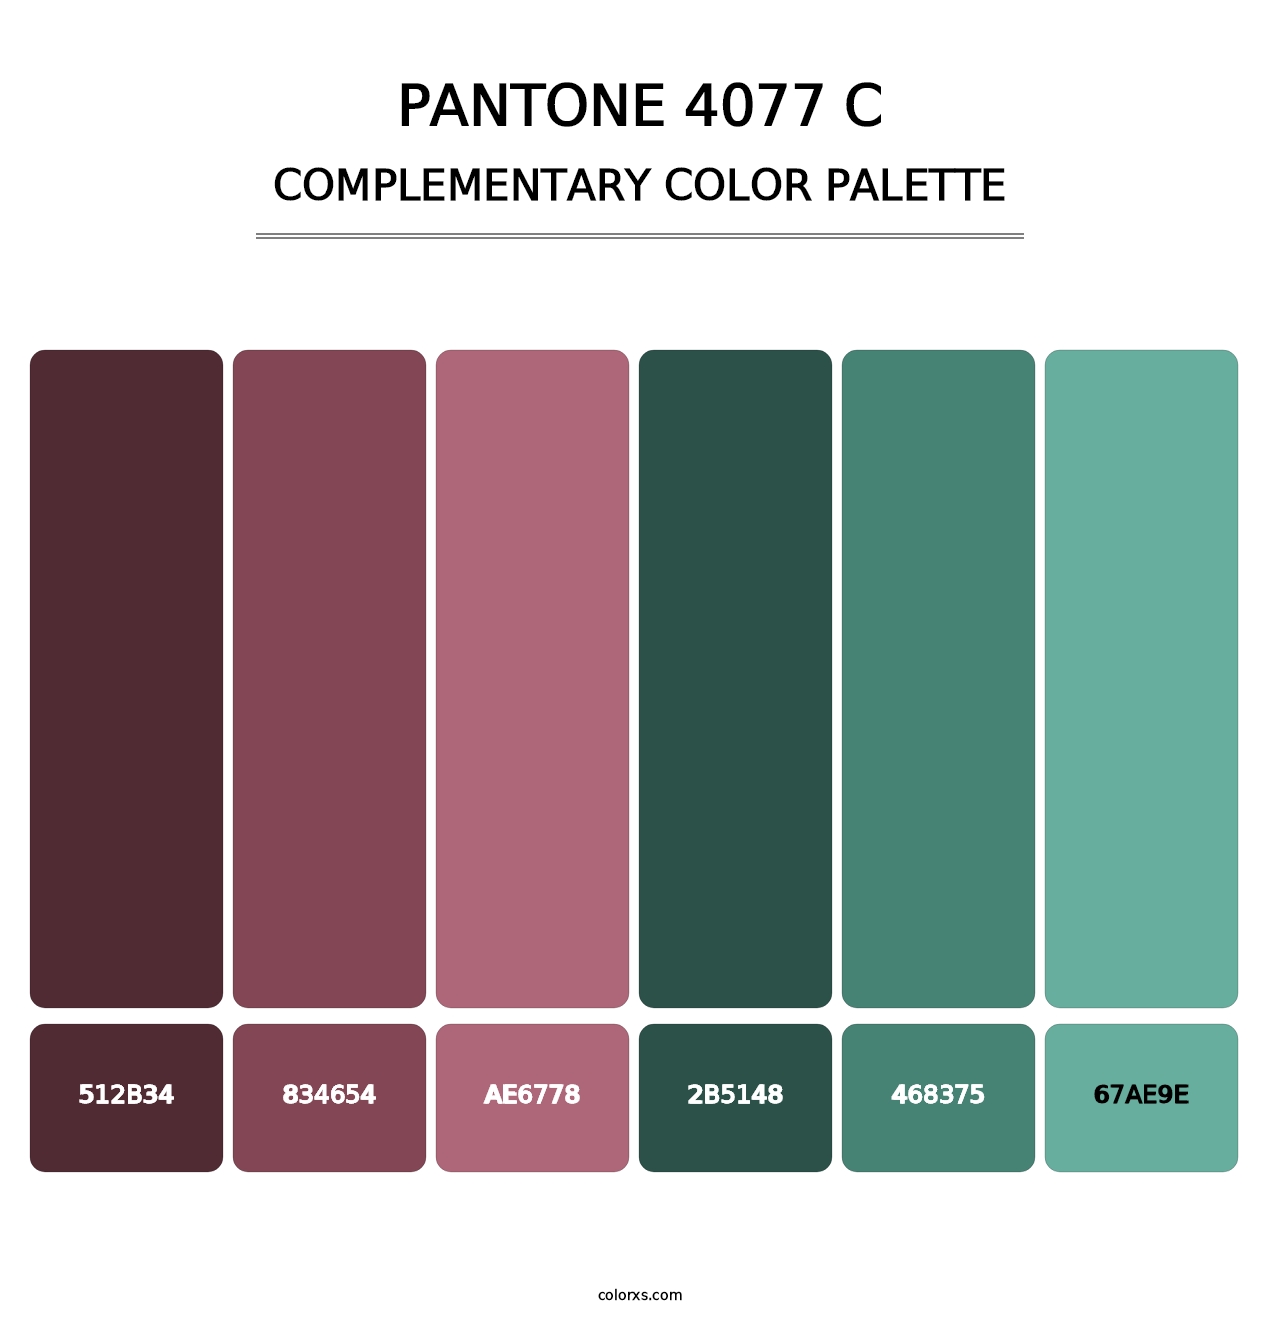 PANTONE 4077 C - Complementary Color Palette